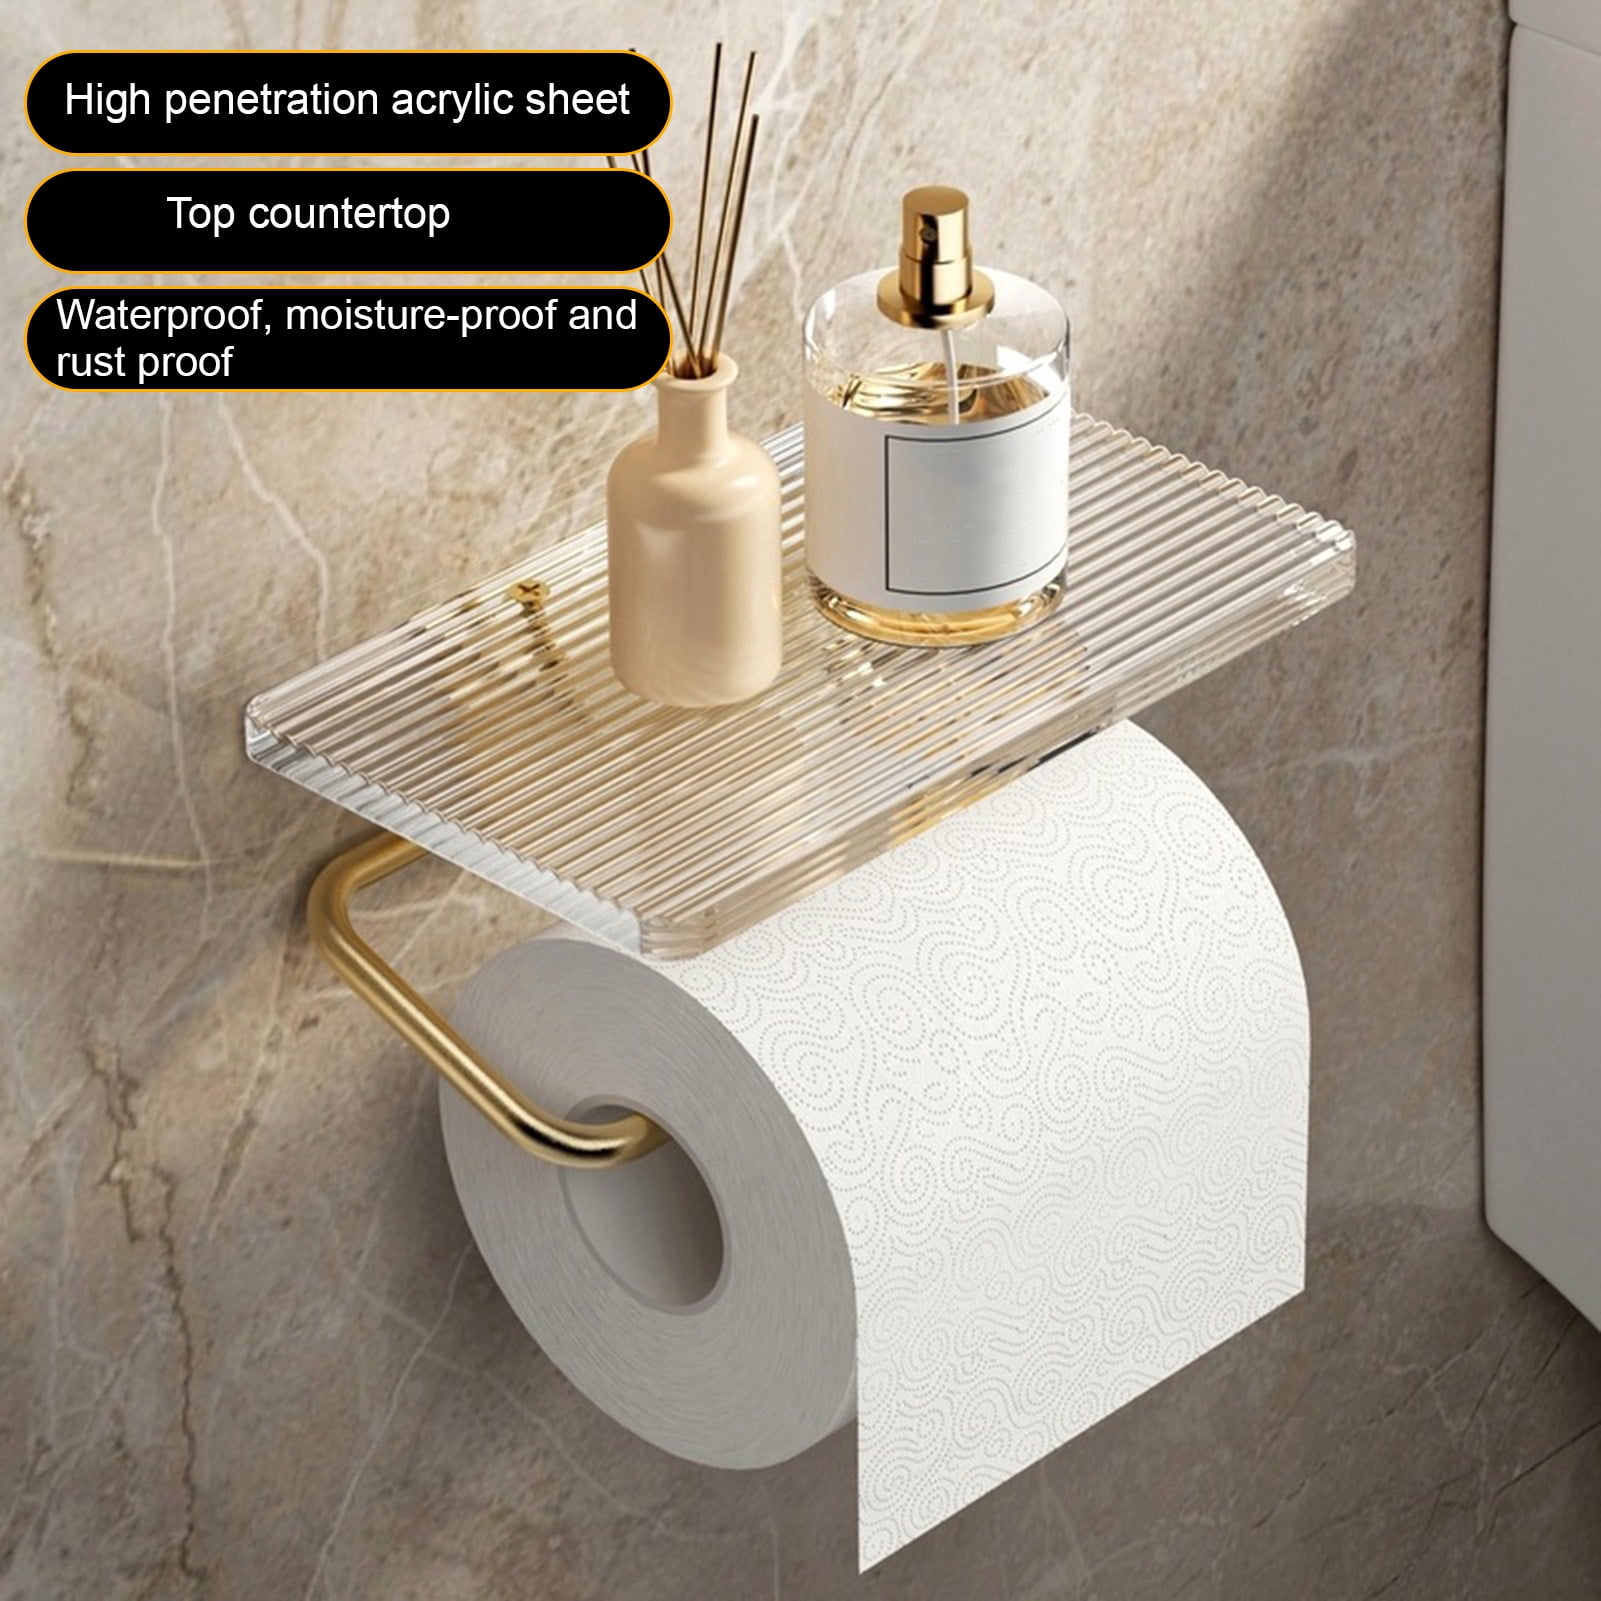 Heioov upgraded toilet paper holder stand for bathroom, holds 3